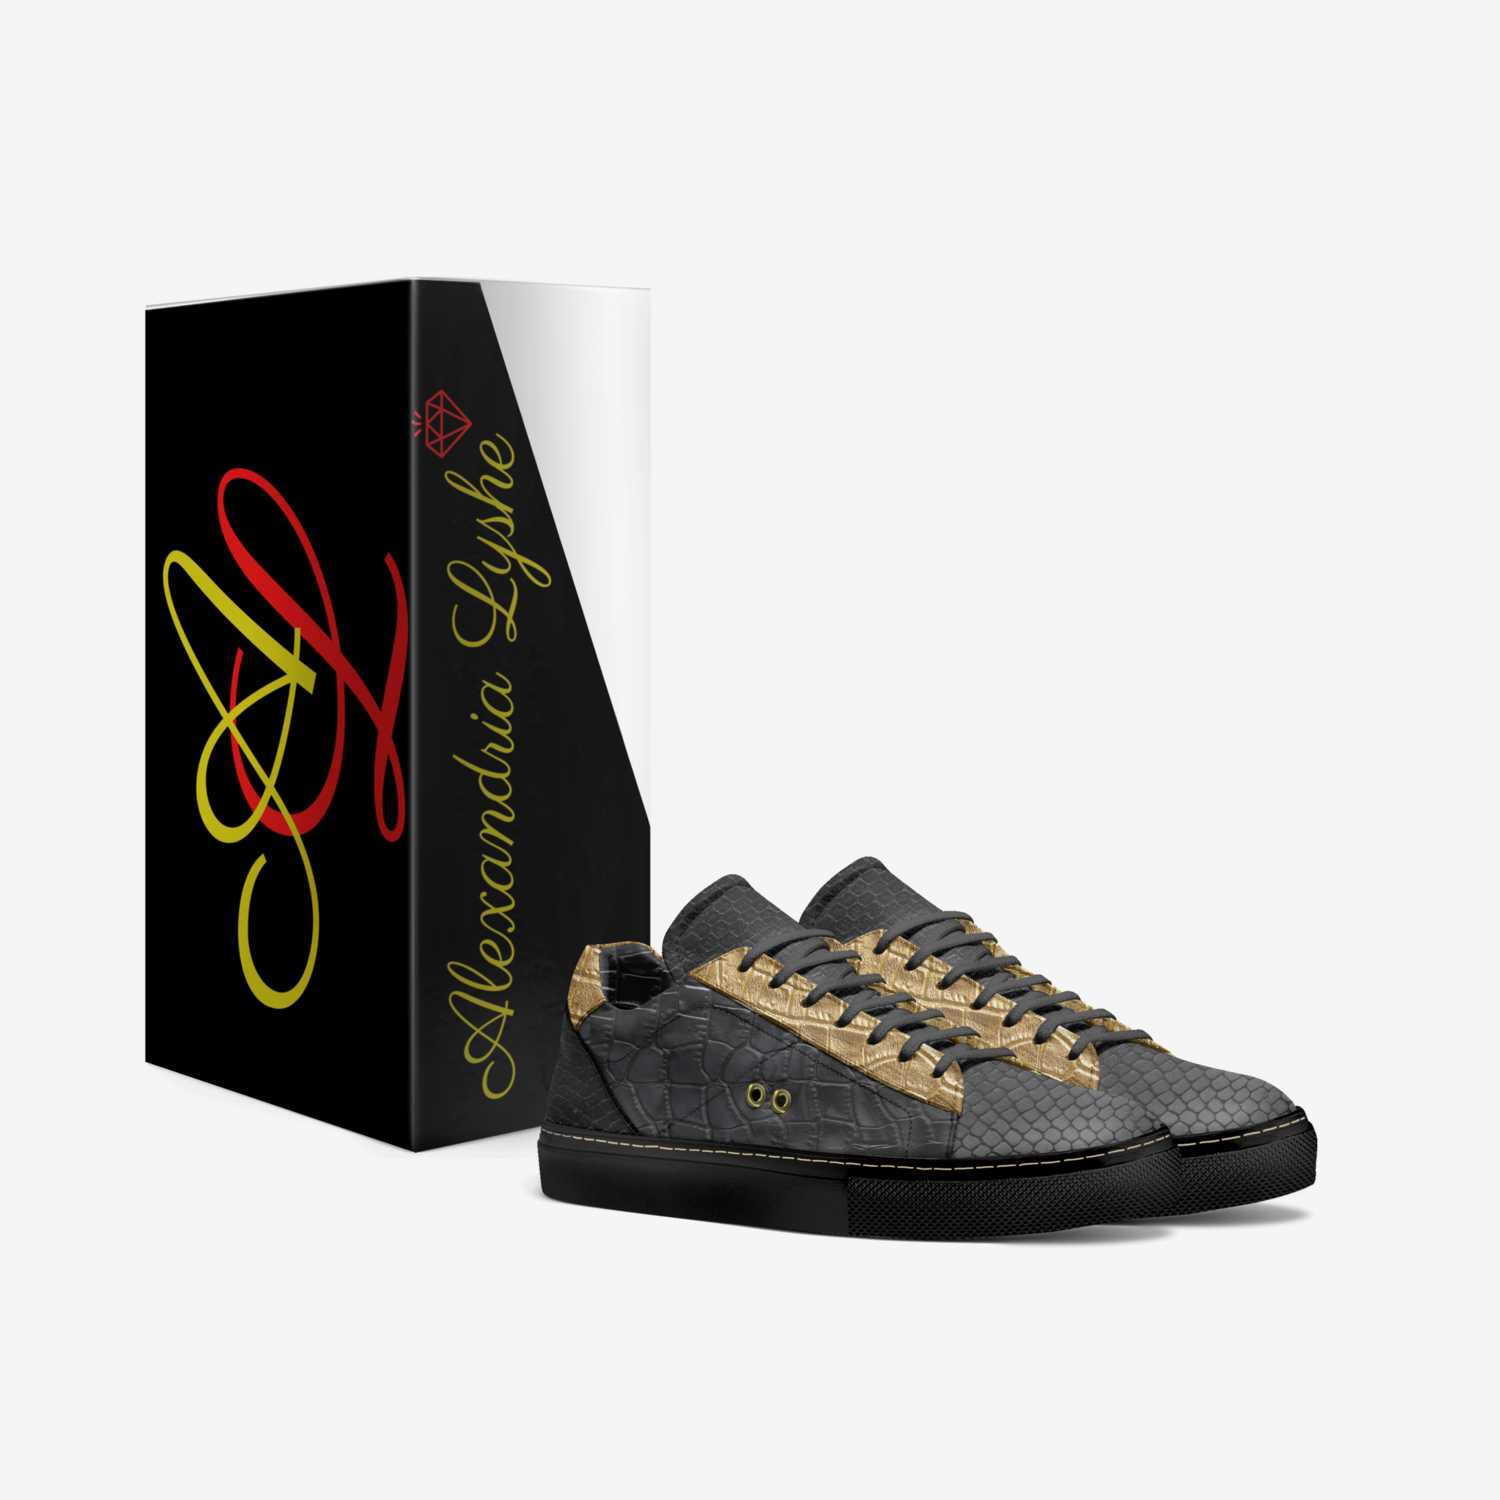 Alexandria Lyshe custom made in Italy shoes by Treivon Daniels & Lauren Lyshe | Box view